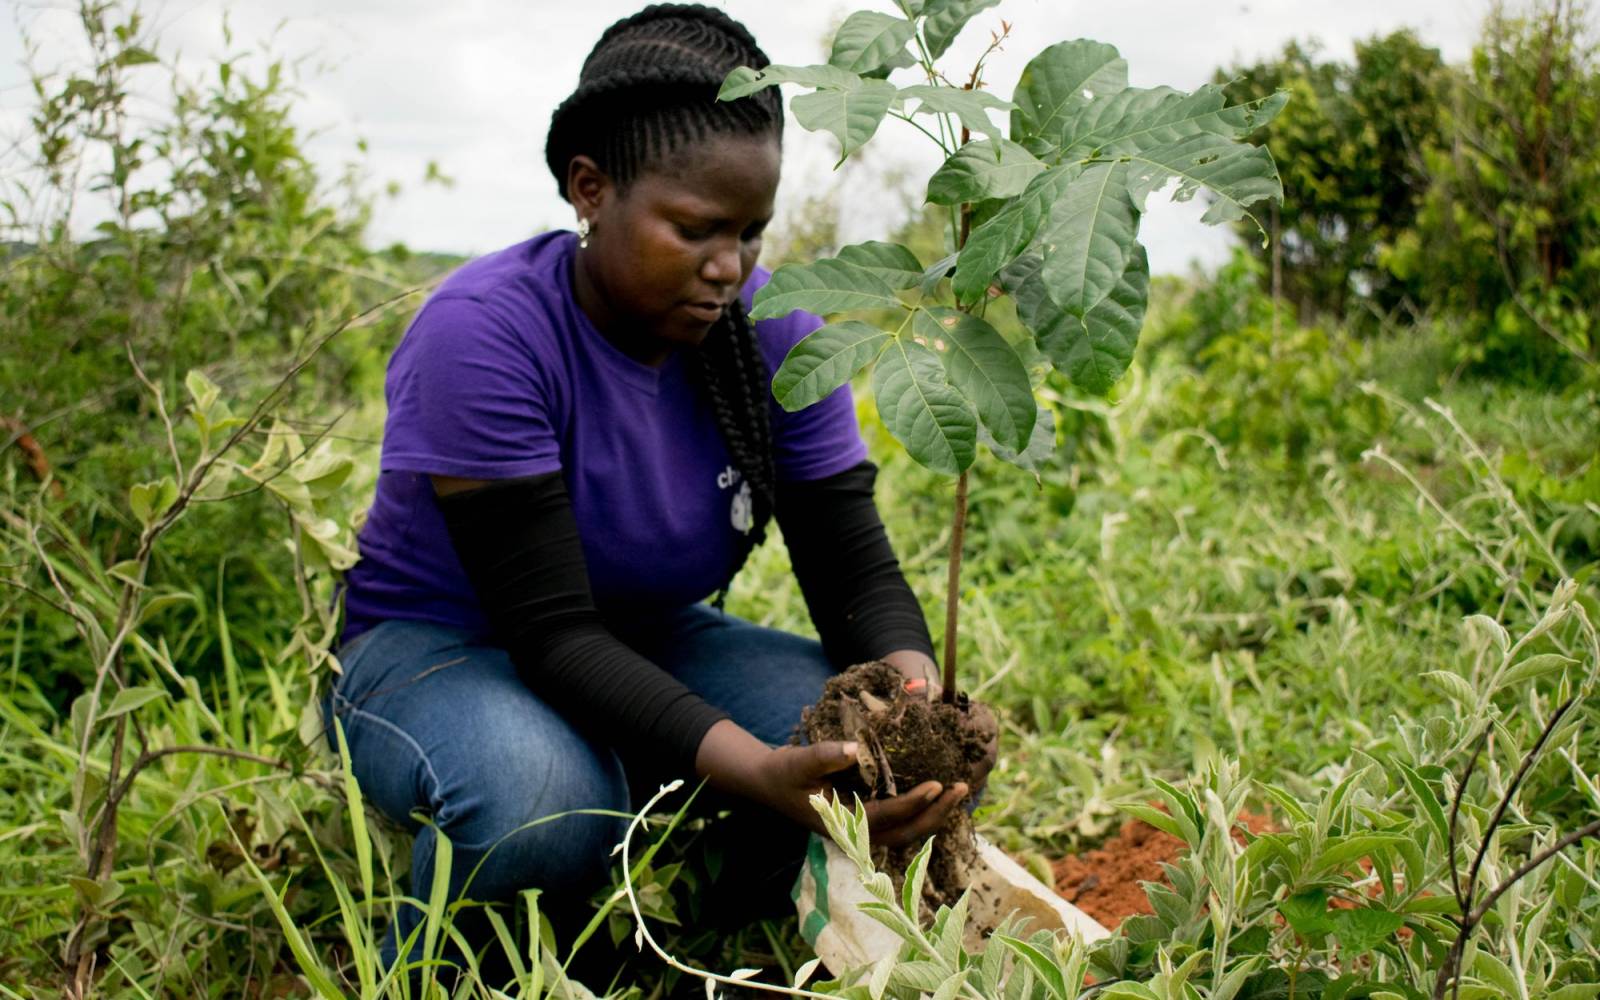 Baumpflanzung in Tansania